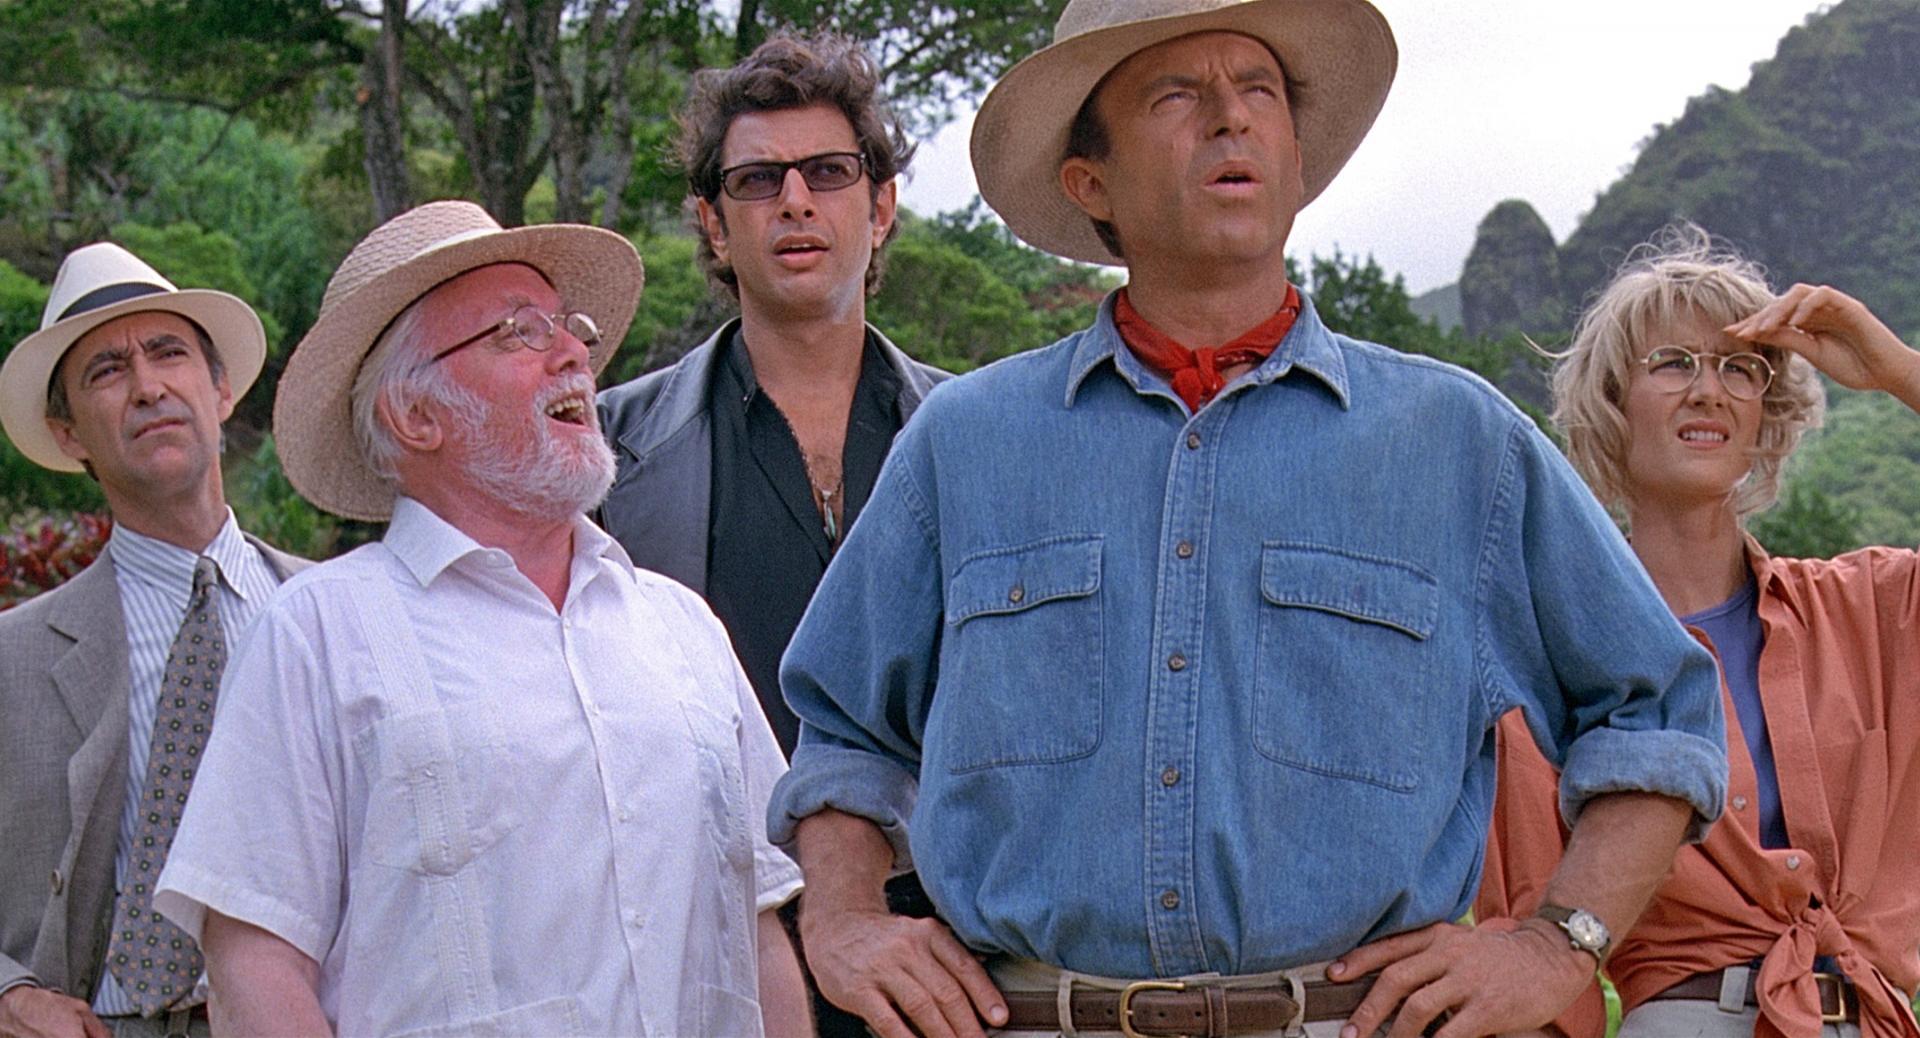 Parque Jurásico (Jurassic Park) (1993) - Filmaffinity